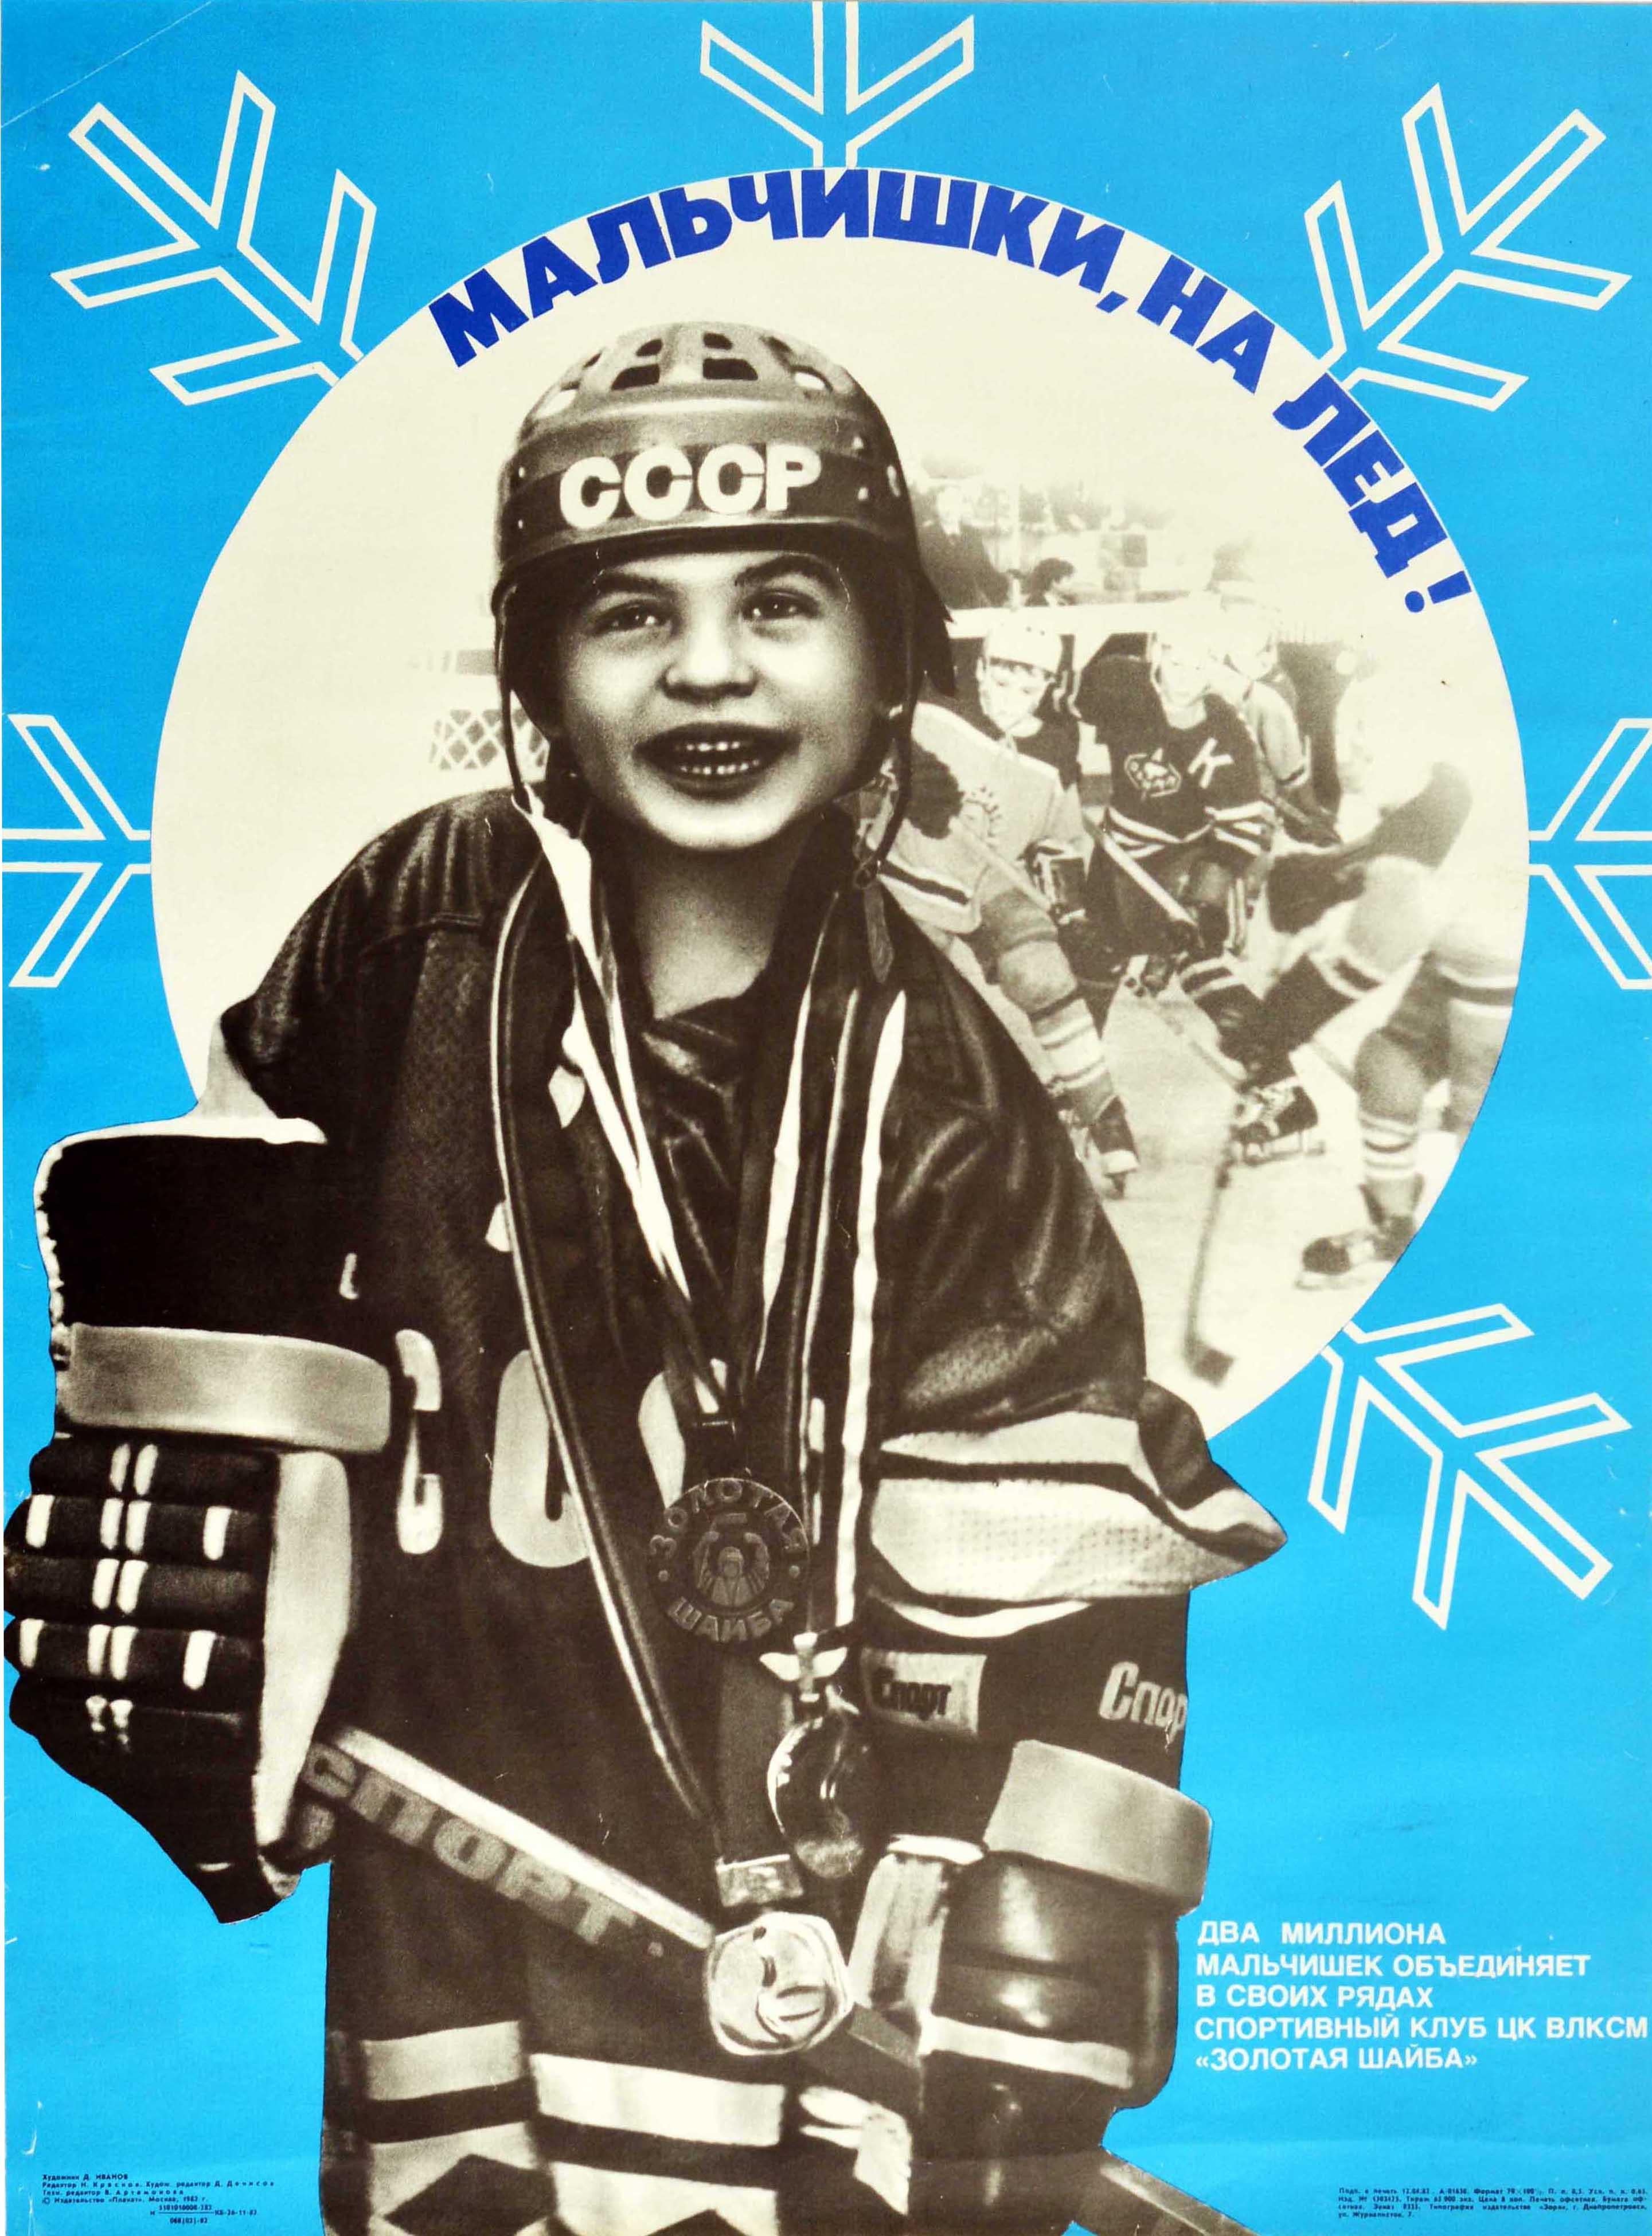 D. Ivanov Print - Original Vintage Poster Get On The Ice! USSR Ice Hockey Soviet Sport Propaganda